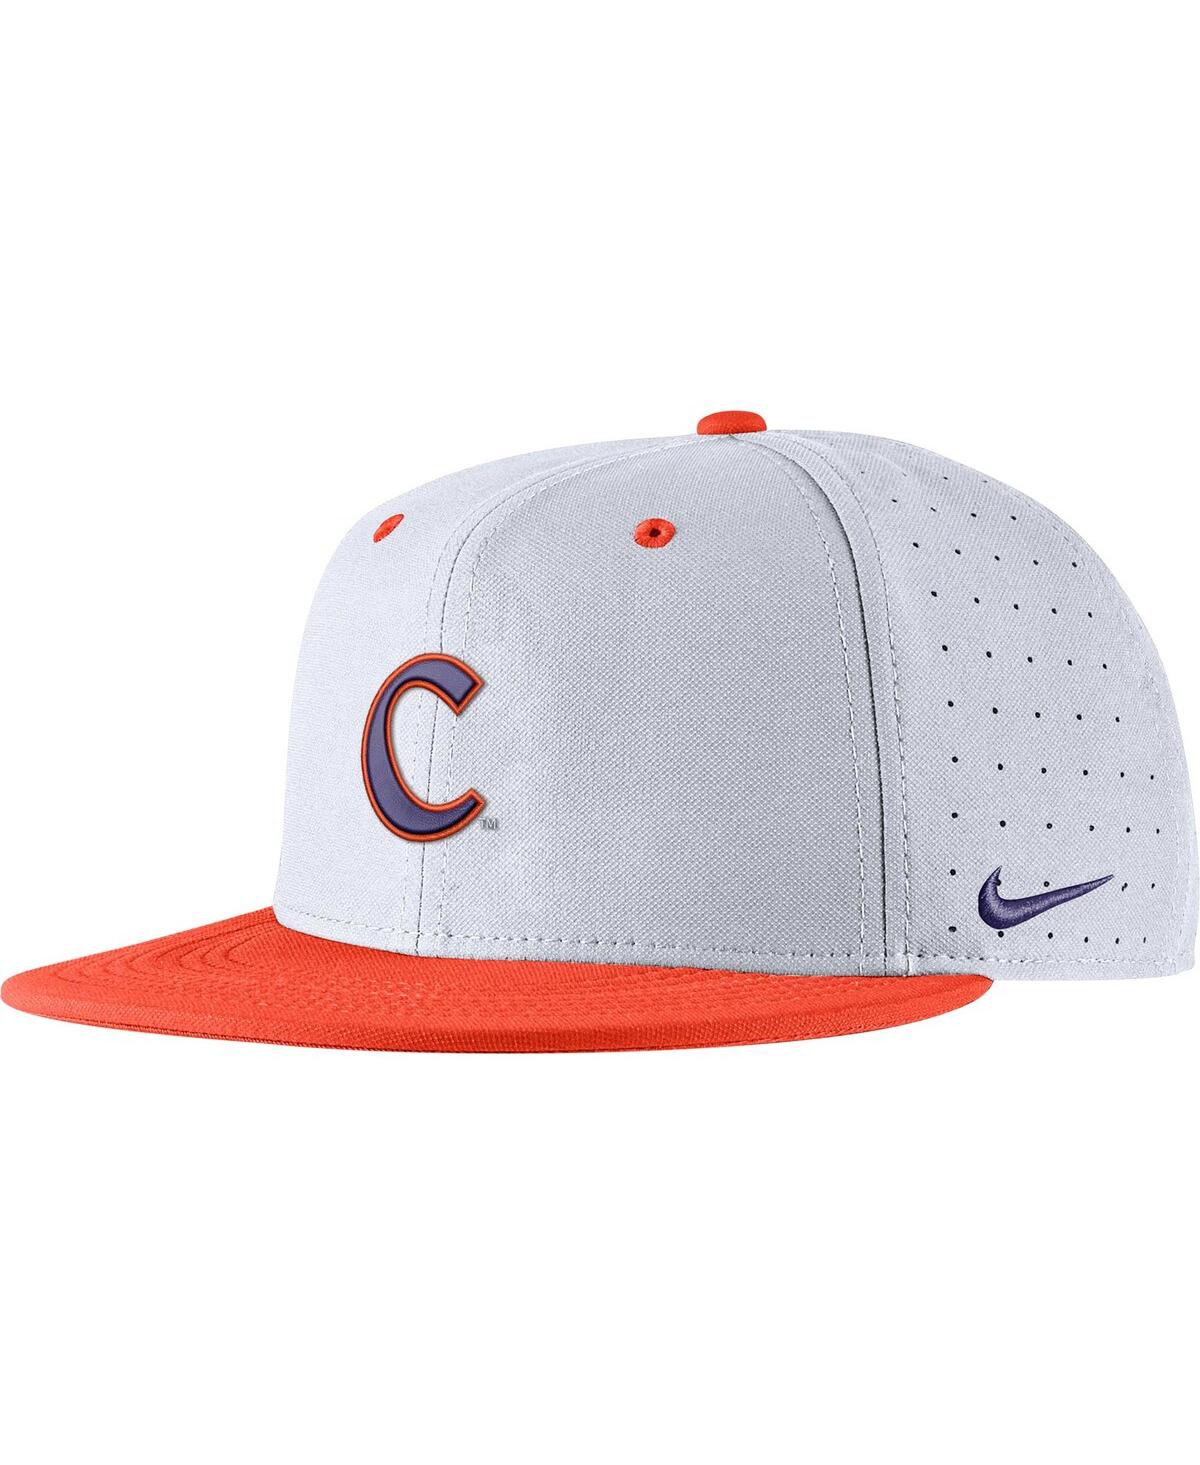 Shop Nike Men's  White Clemson Tigers Aero True Baseball Performance Fitted Hat